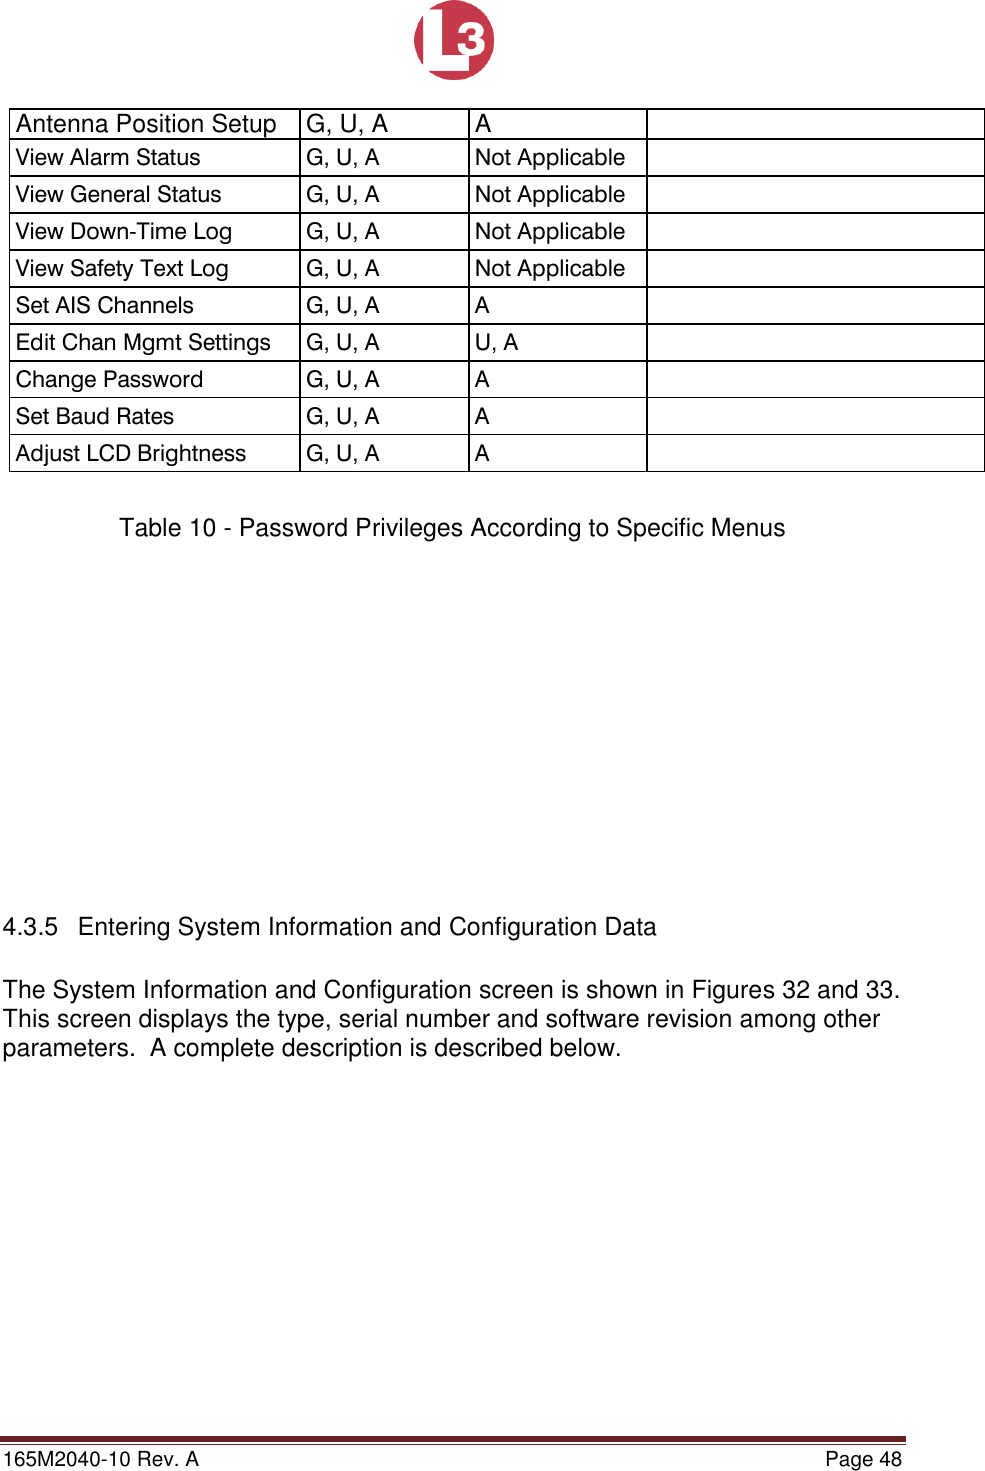 Page 48 of L3 Technologies AISA6 Shipboard Mobile AIS User Manual Memory Verification Procedure